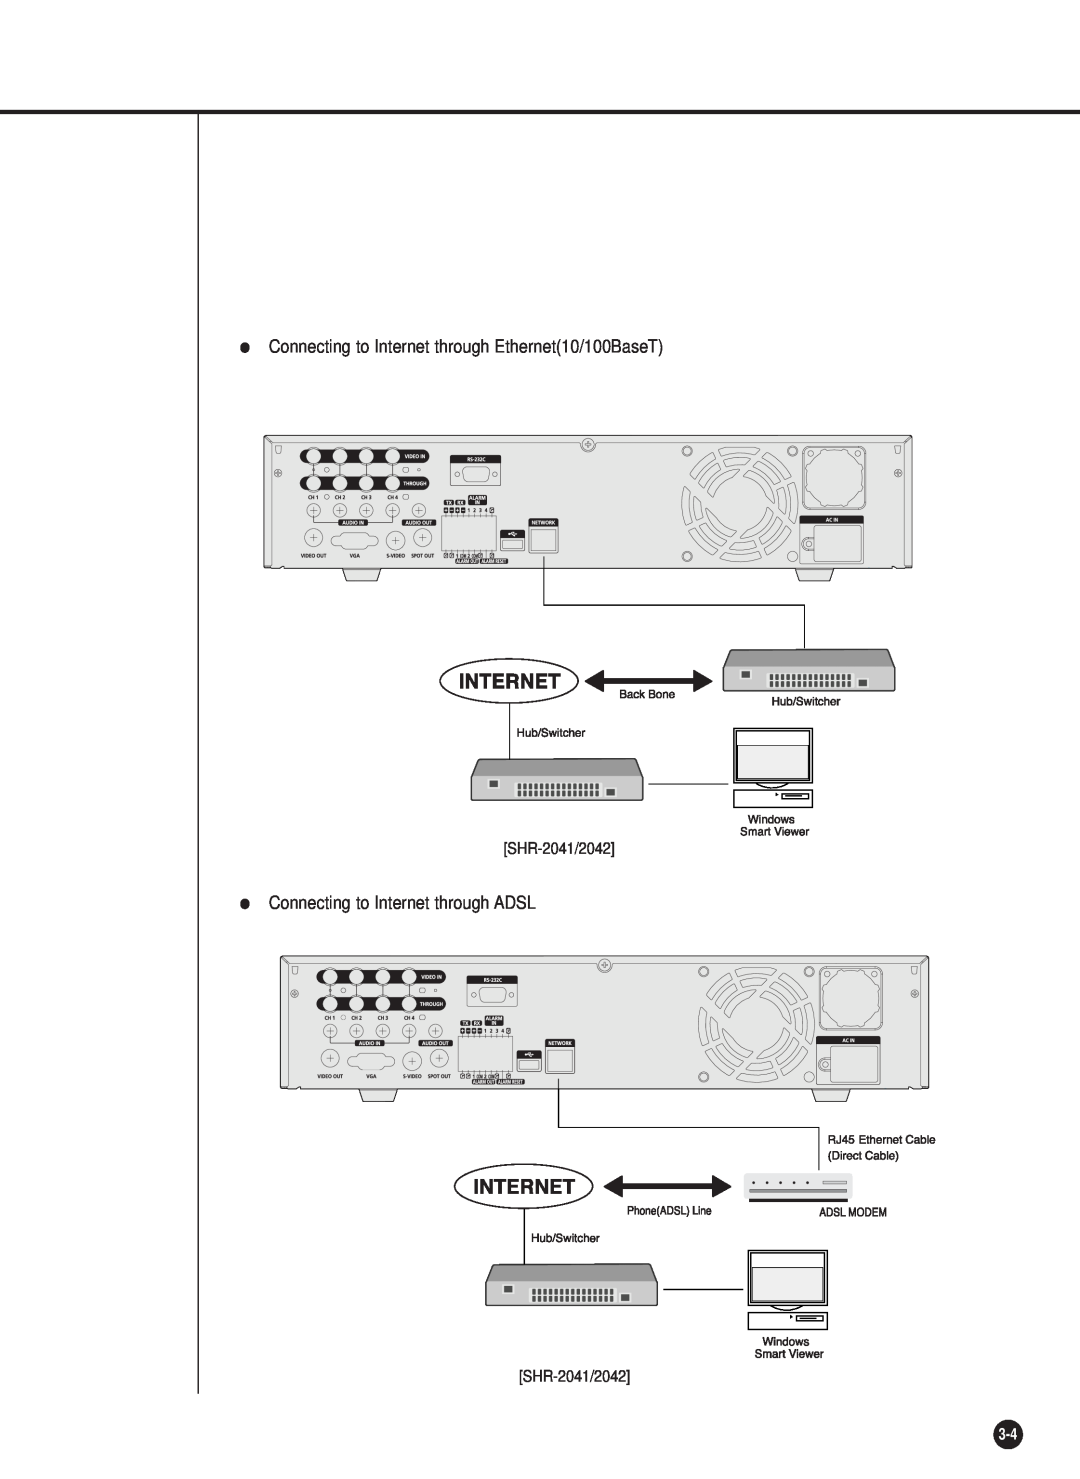 Samsung SHR-2040PX Connecting to Internet through Ethernet10/100BaseT, Connecting to Internet through ADSL, SHR-2041/2042 